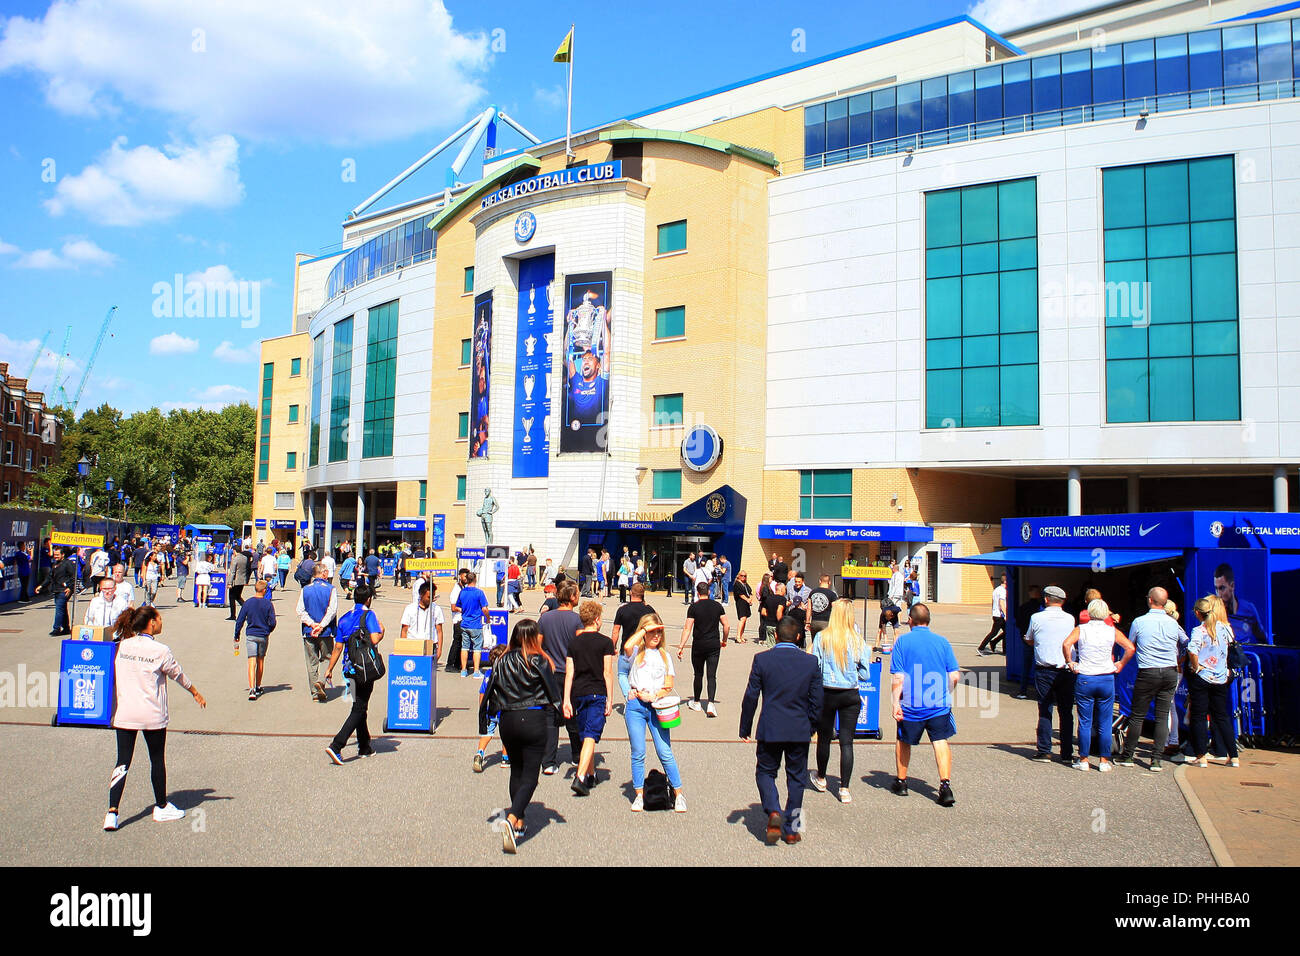 Stamford Bridge Stadium in Chelsea, London, UK Editorial Stock Photo -  Image of shirt, great: 219880443